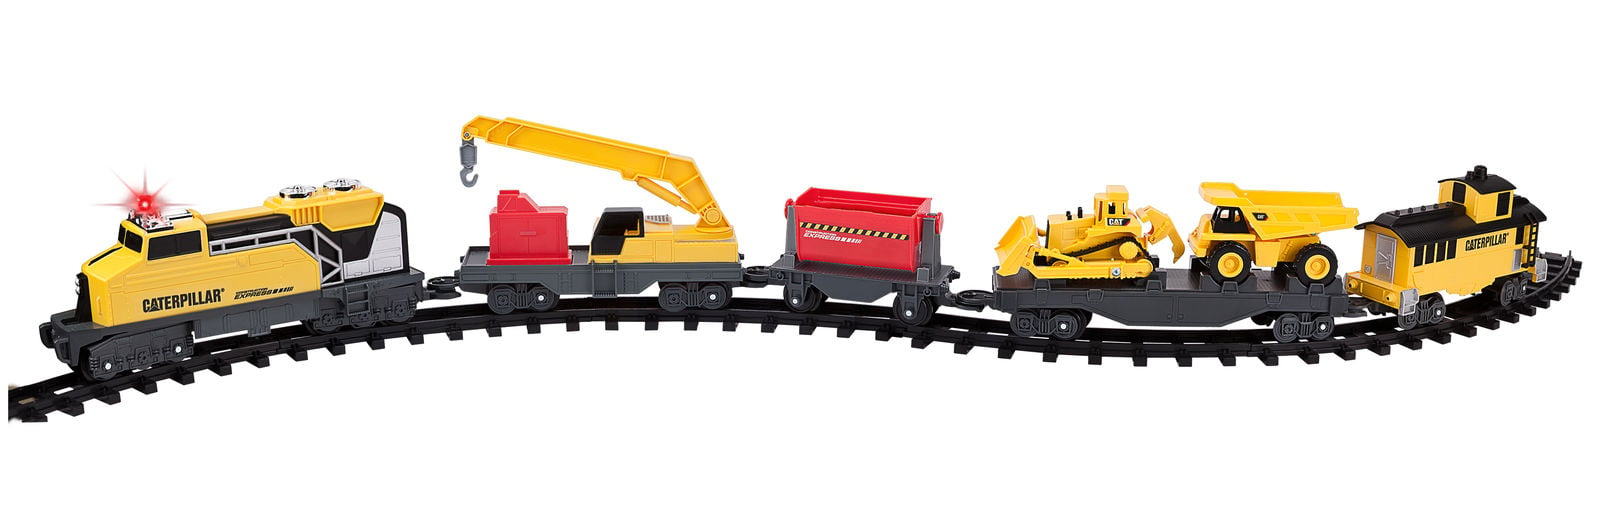 caterpillar toy train set